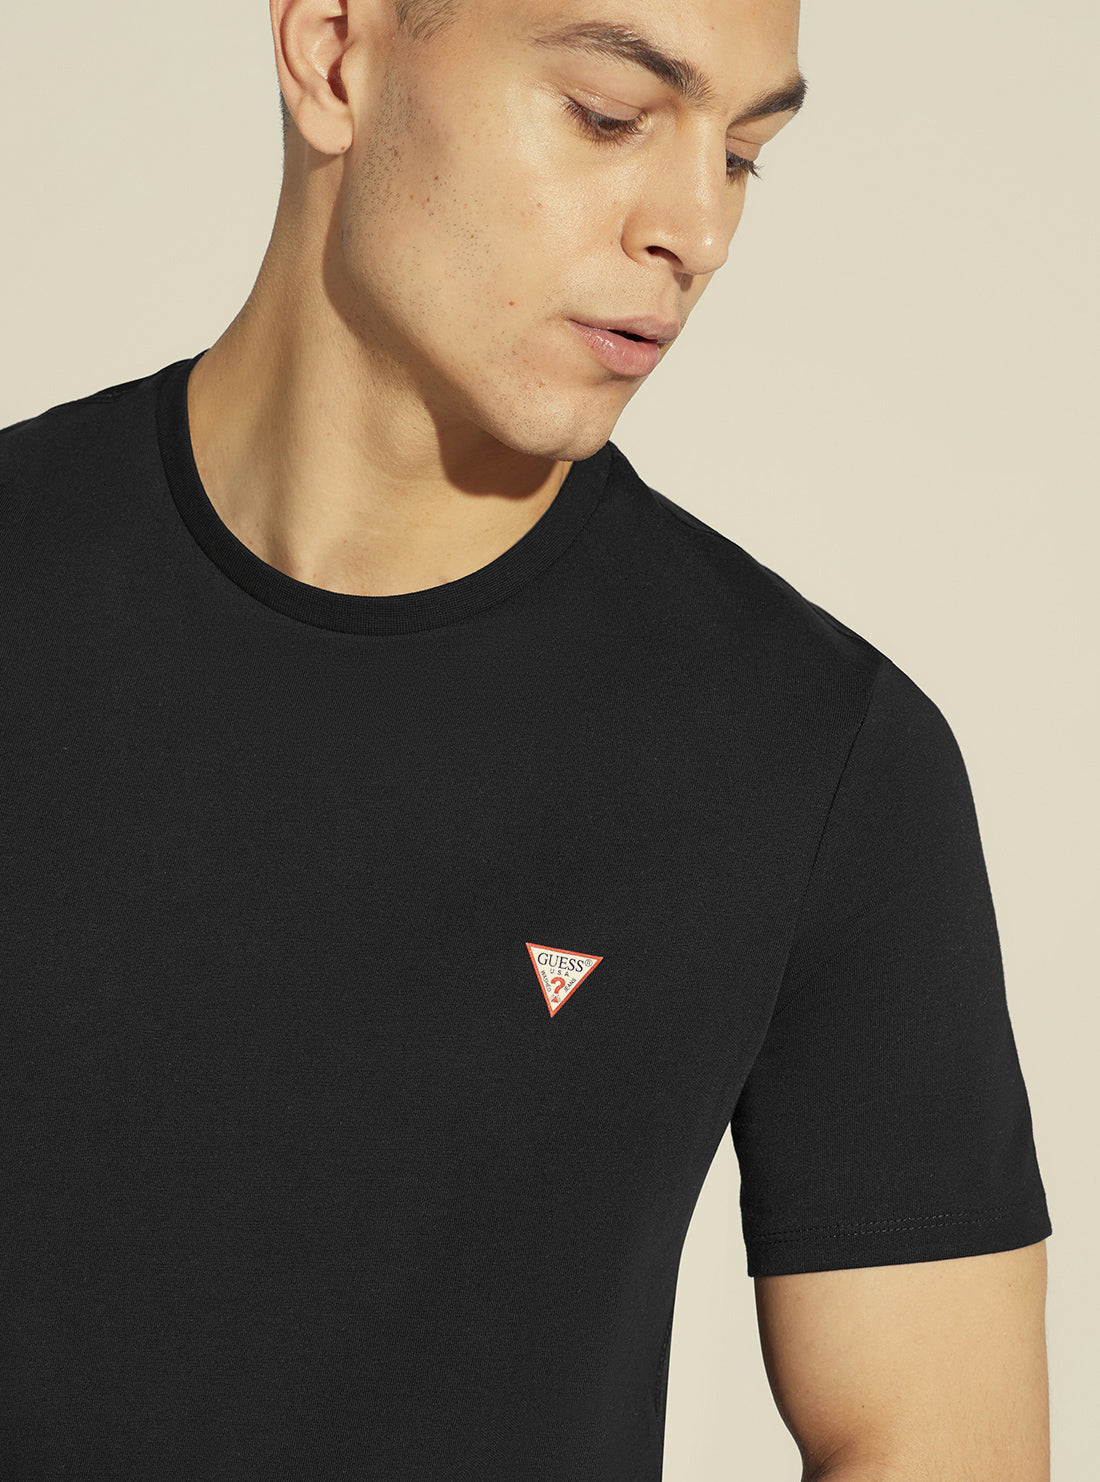 GUESS Men's Black Core Logo T-Shirt M2YI36I3Z11 Detail View